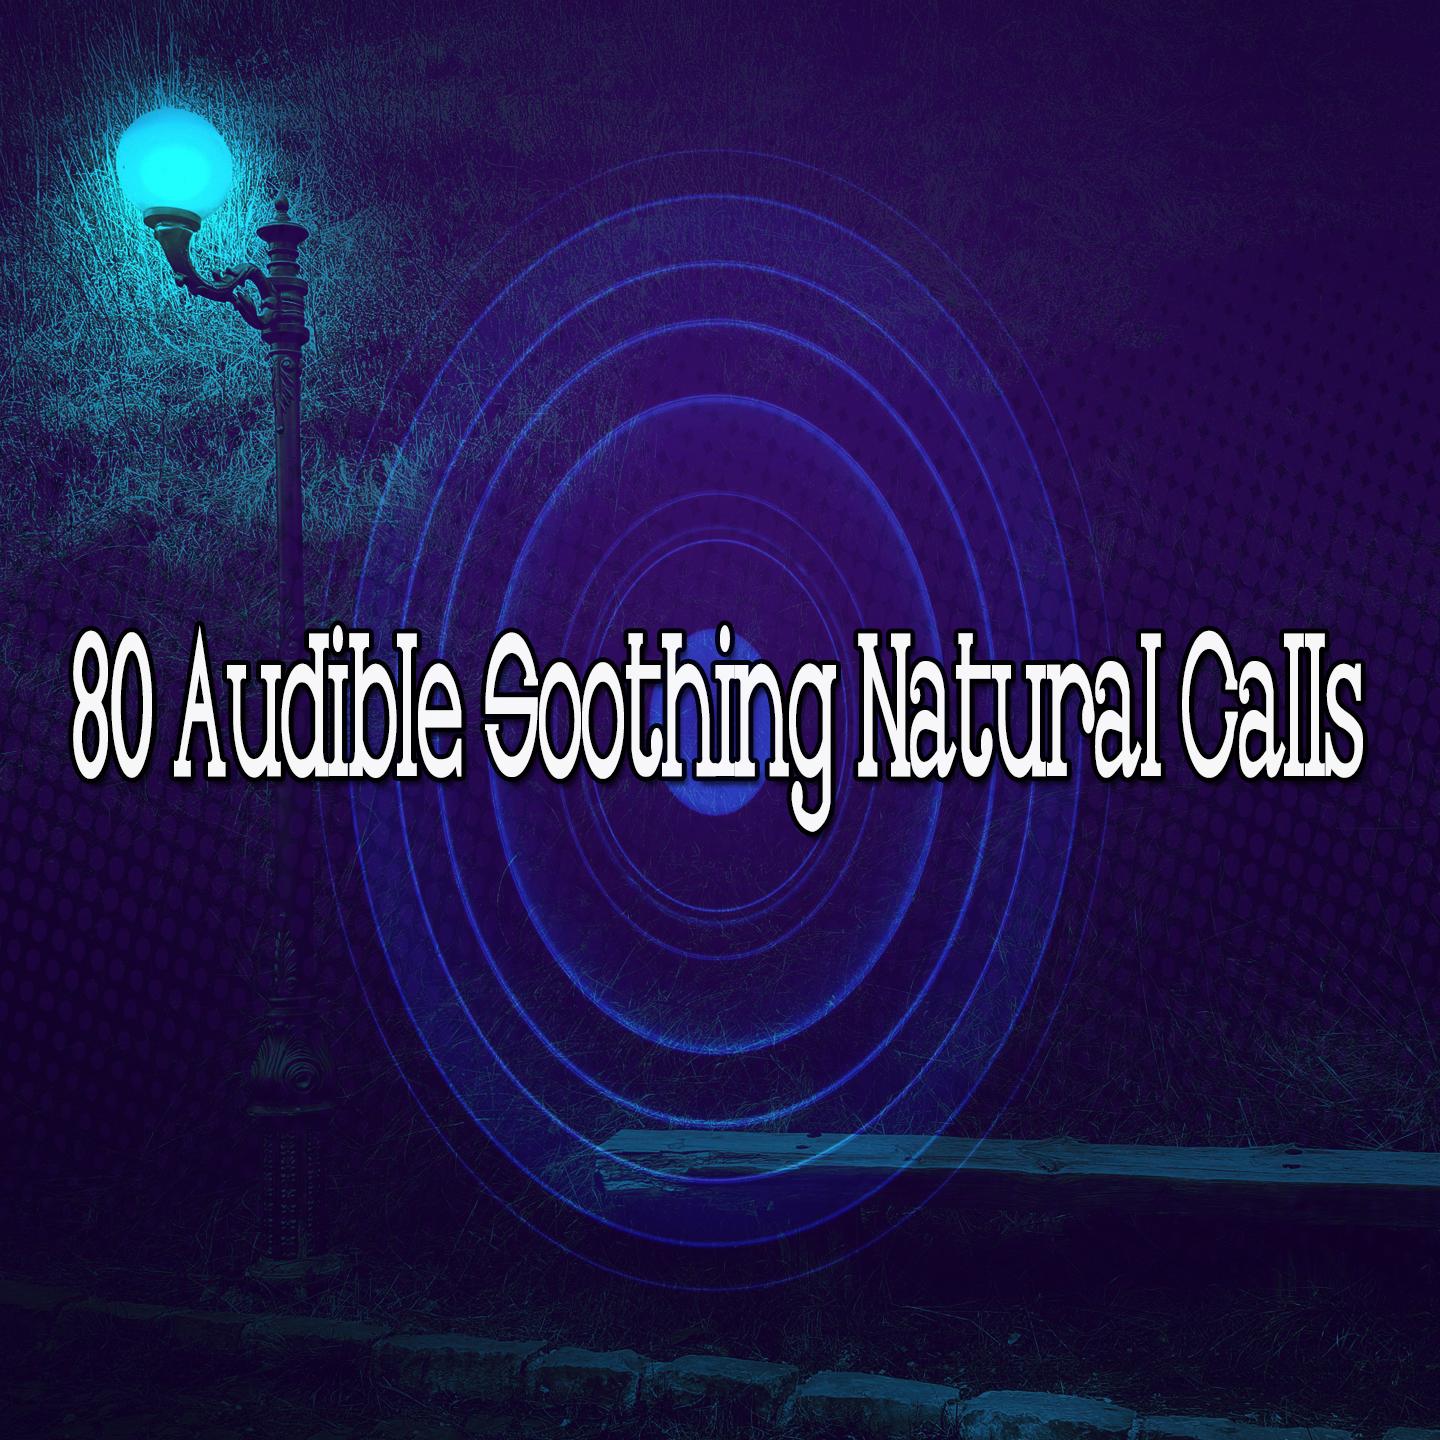 80 Audible Soothing Natural Calls